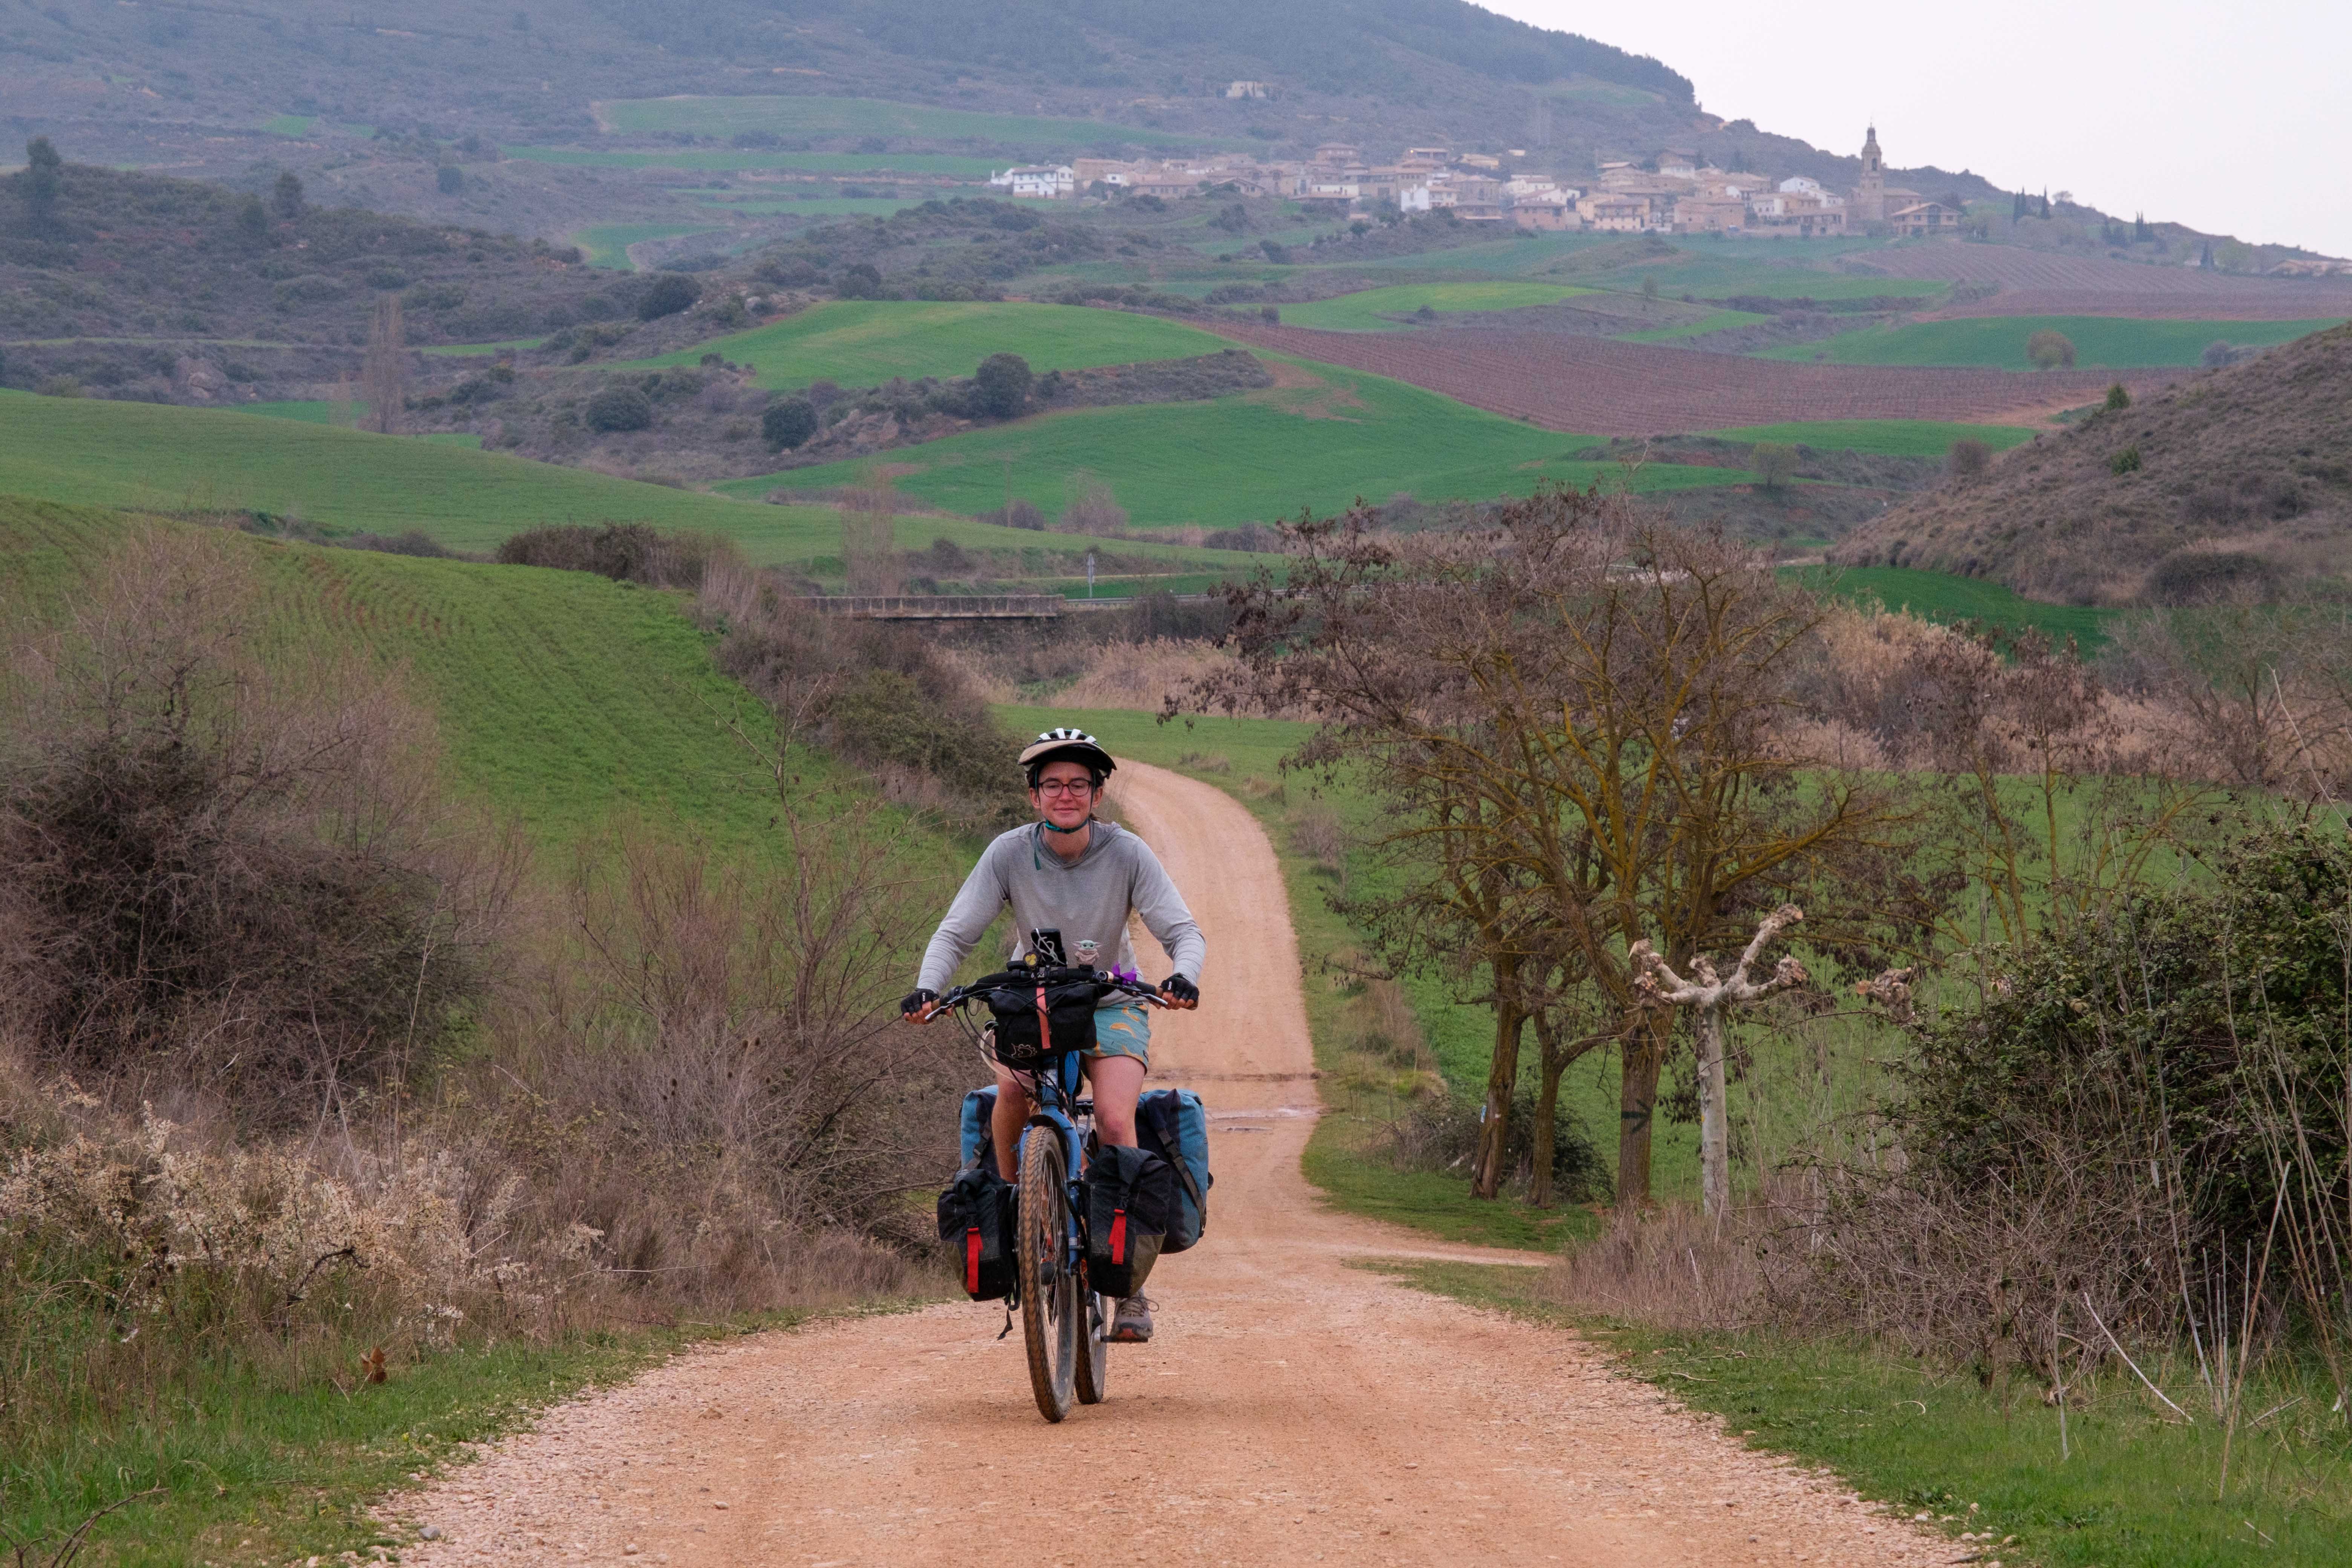 Camino de Santiago pilgrimage route: 'Sister Bicycle' – Motorists